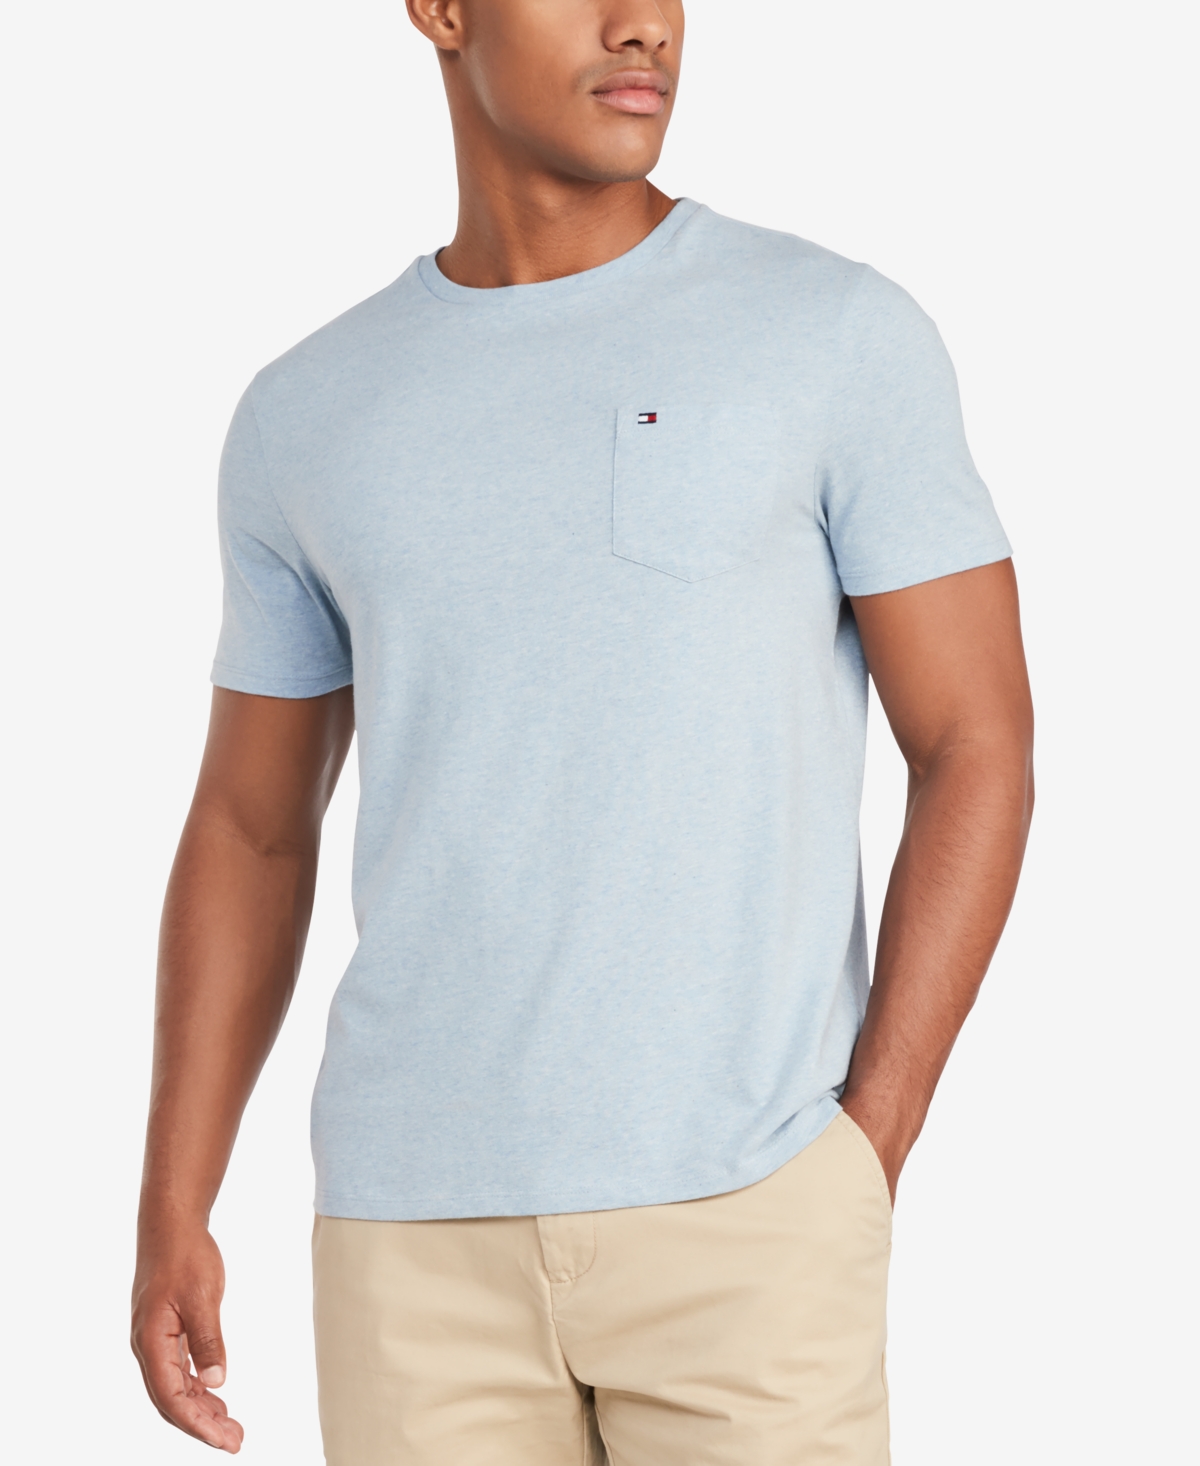 Shirt w Pocket T Details about   NWT Men's Tommy Hilfiger Short-Sleeve Nantucket Tee